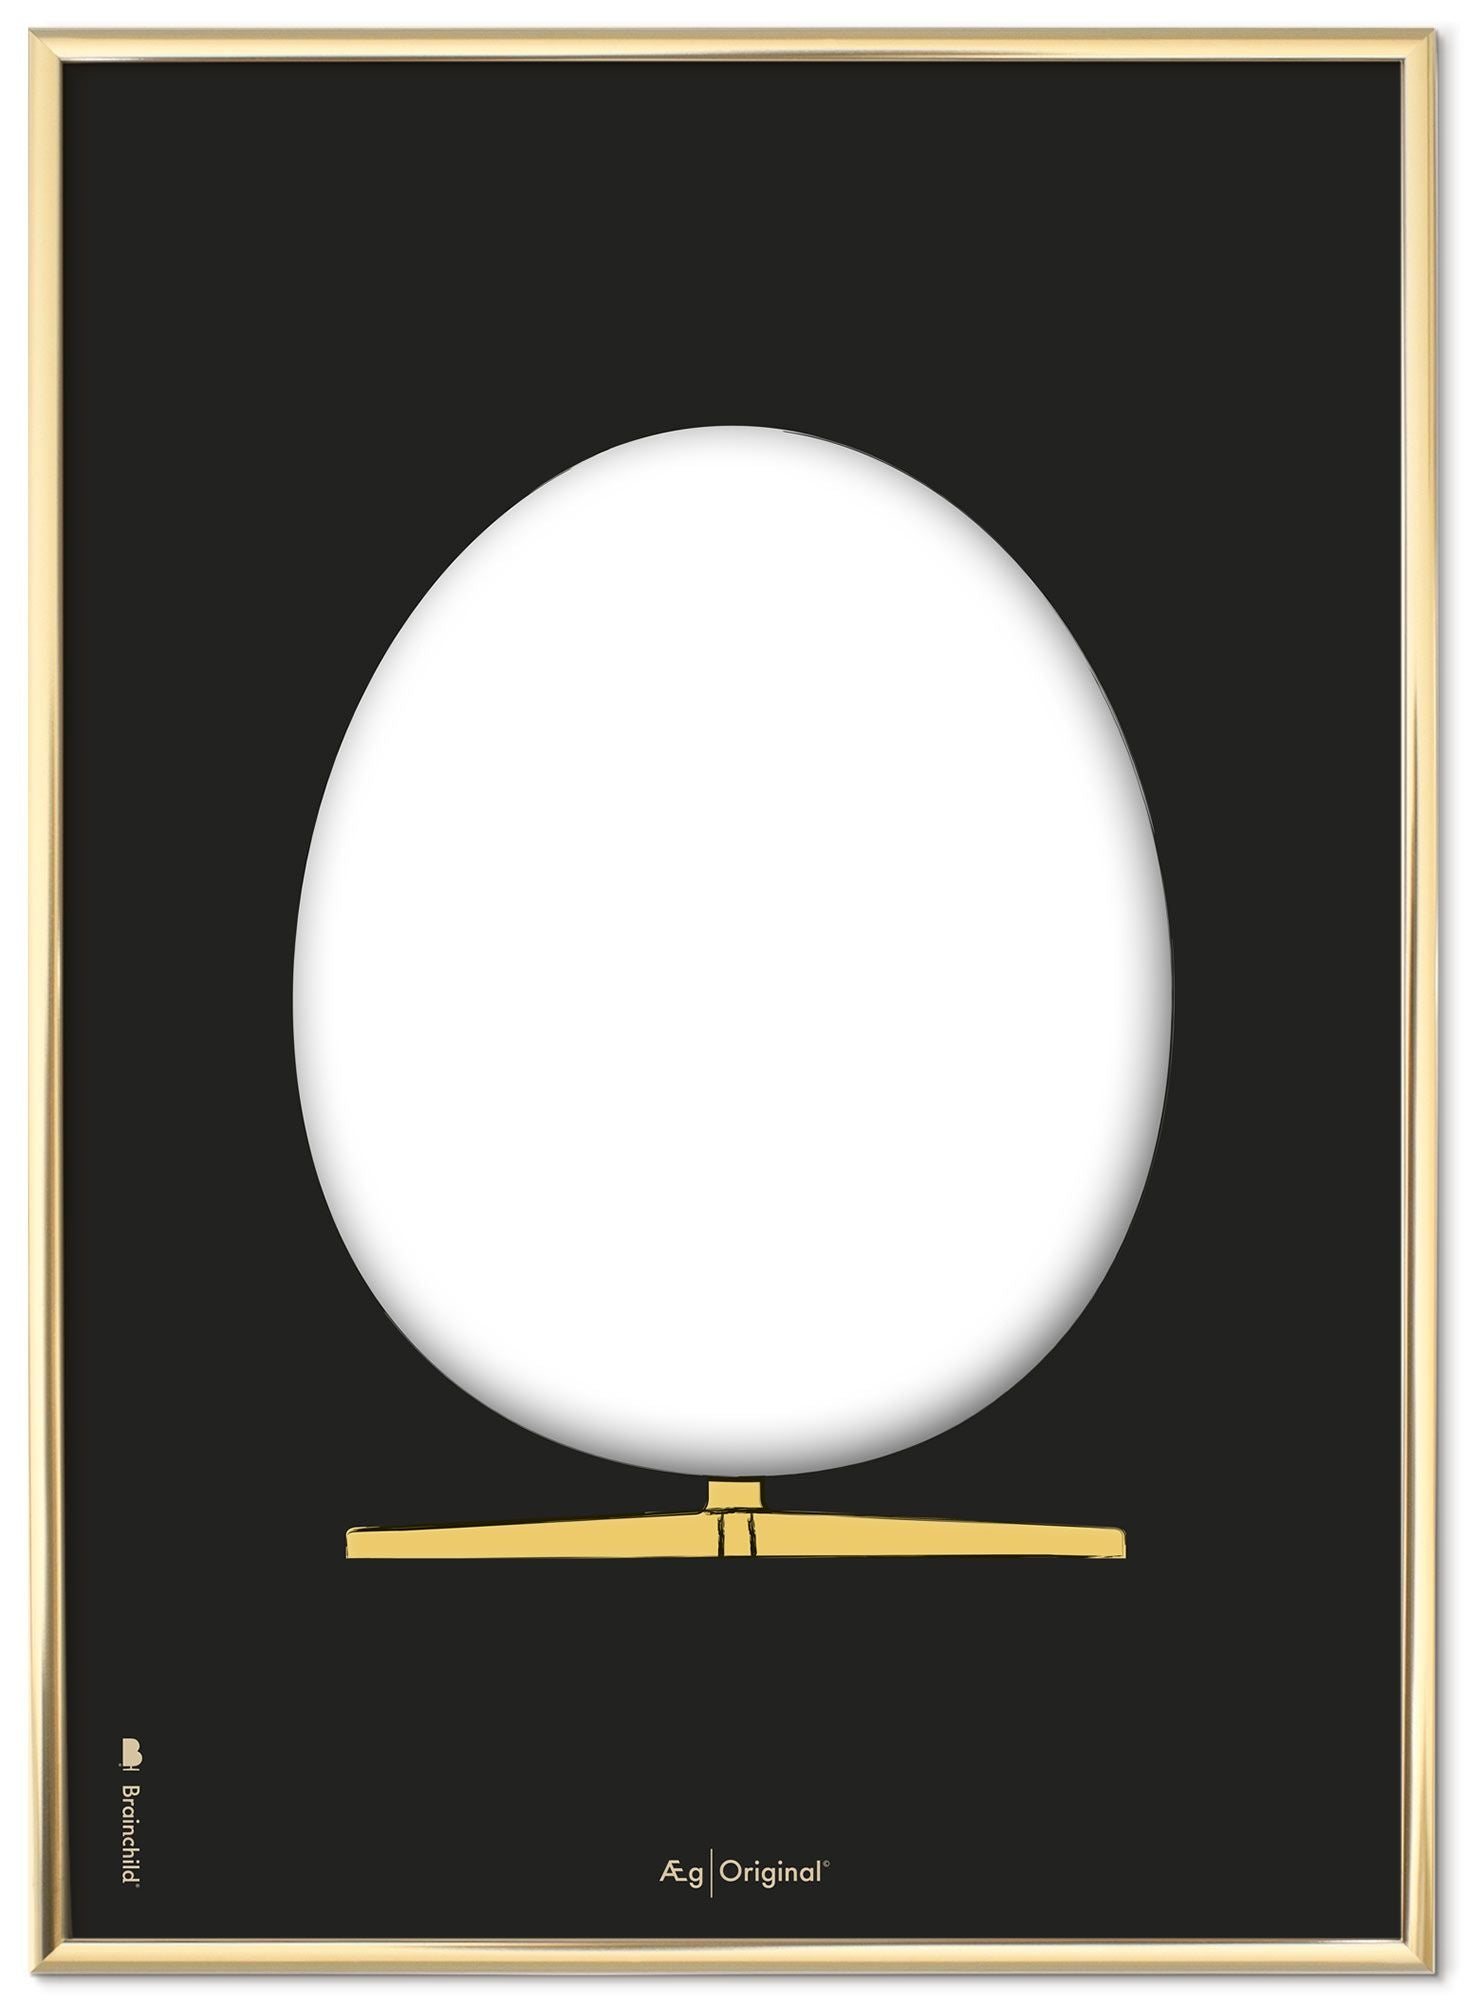 Brainchild The Egg Design Sketch Poster Frame Made Of Brass Colored Metal A5, Black Background